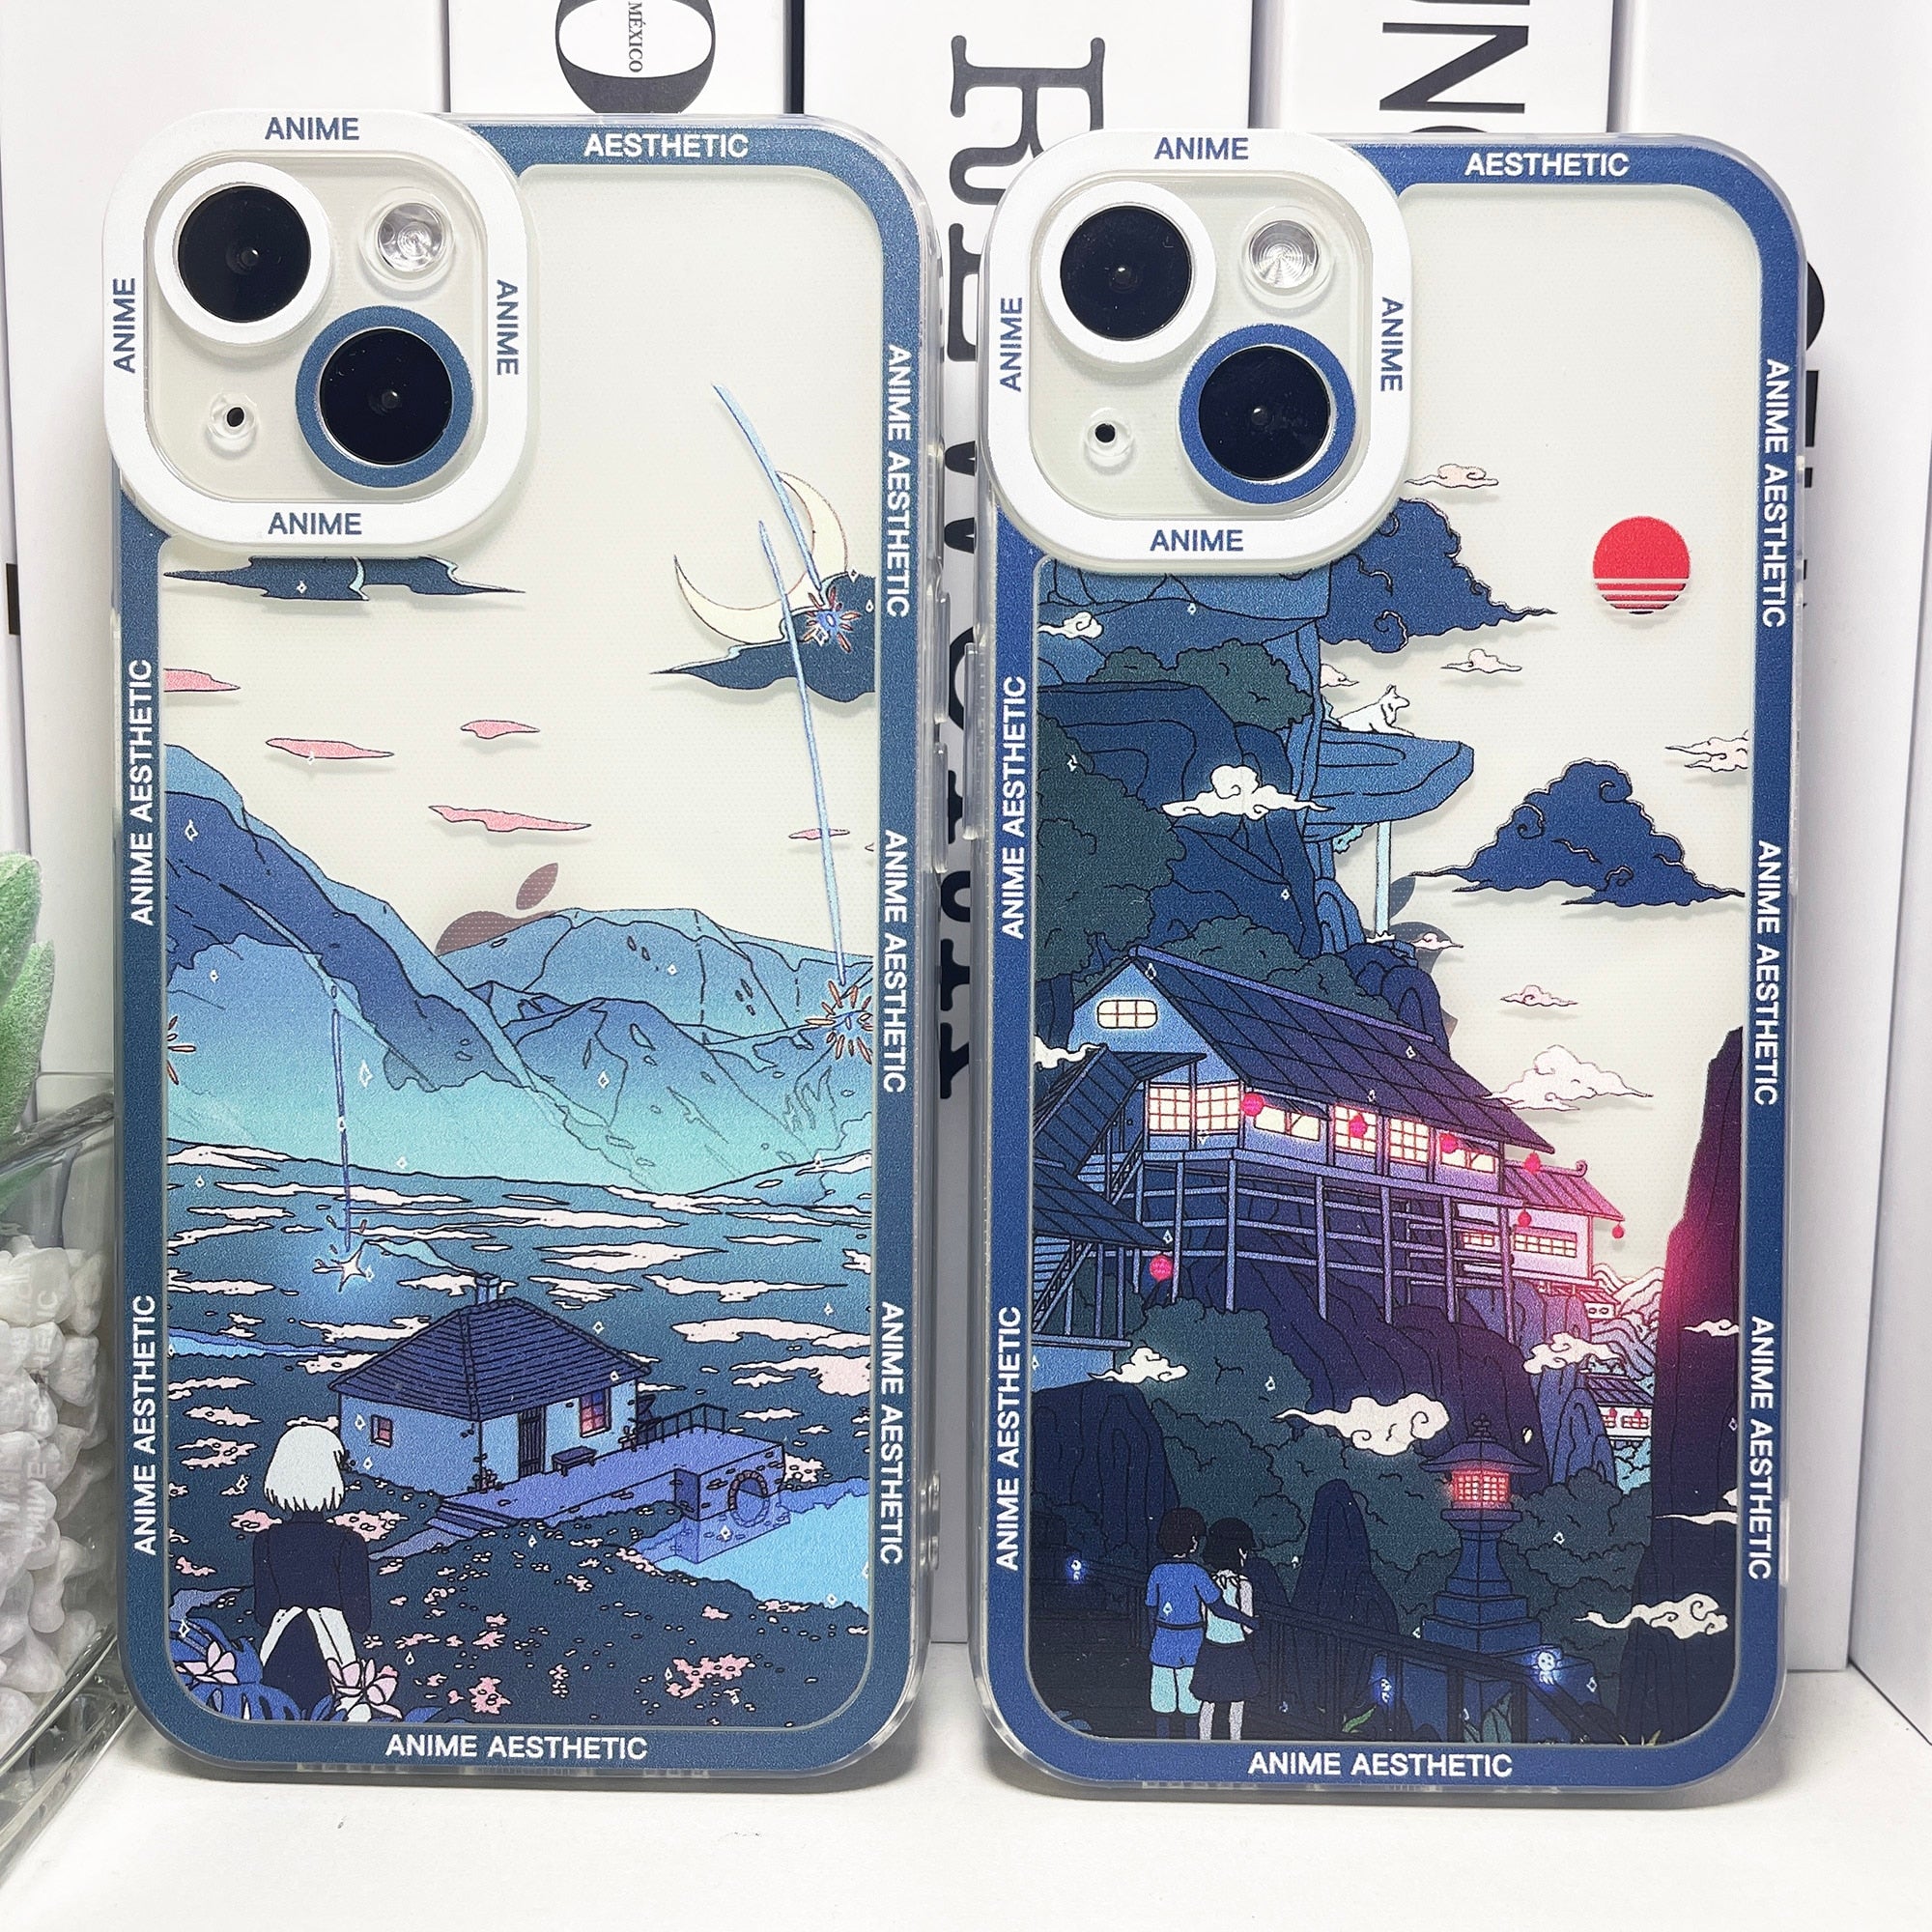 Custom Anime Phone Cases – Anime Portraits